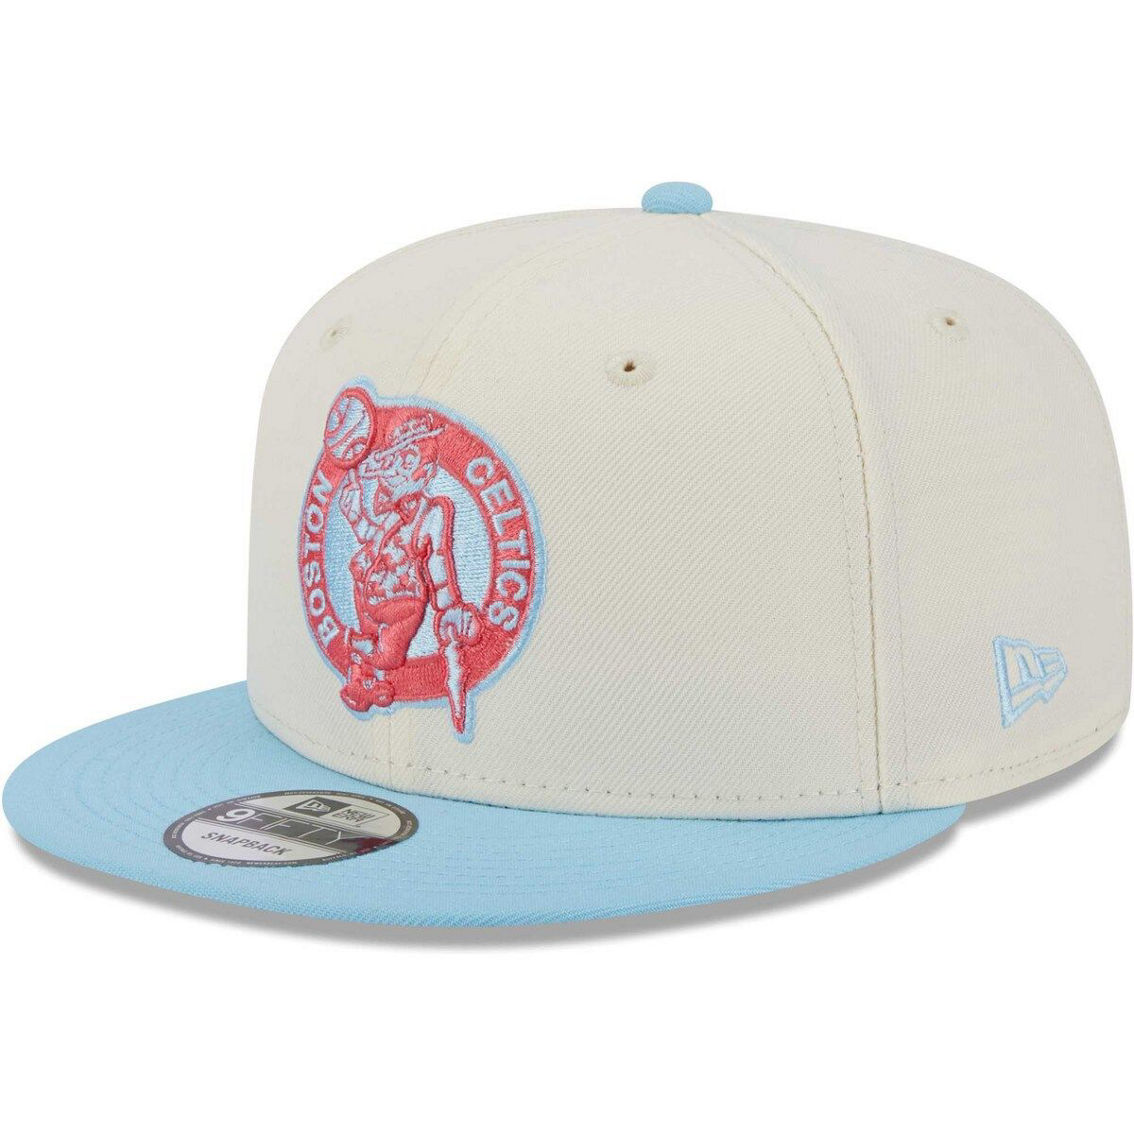 New Era Men's White/Powder Blue Boston Celtics 2-Tone Color Pack 9FIFTY Snapback Hat - Image 1 of 4